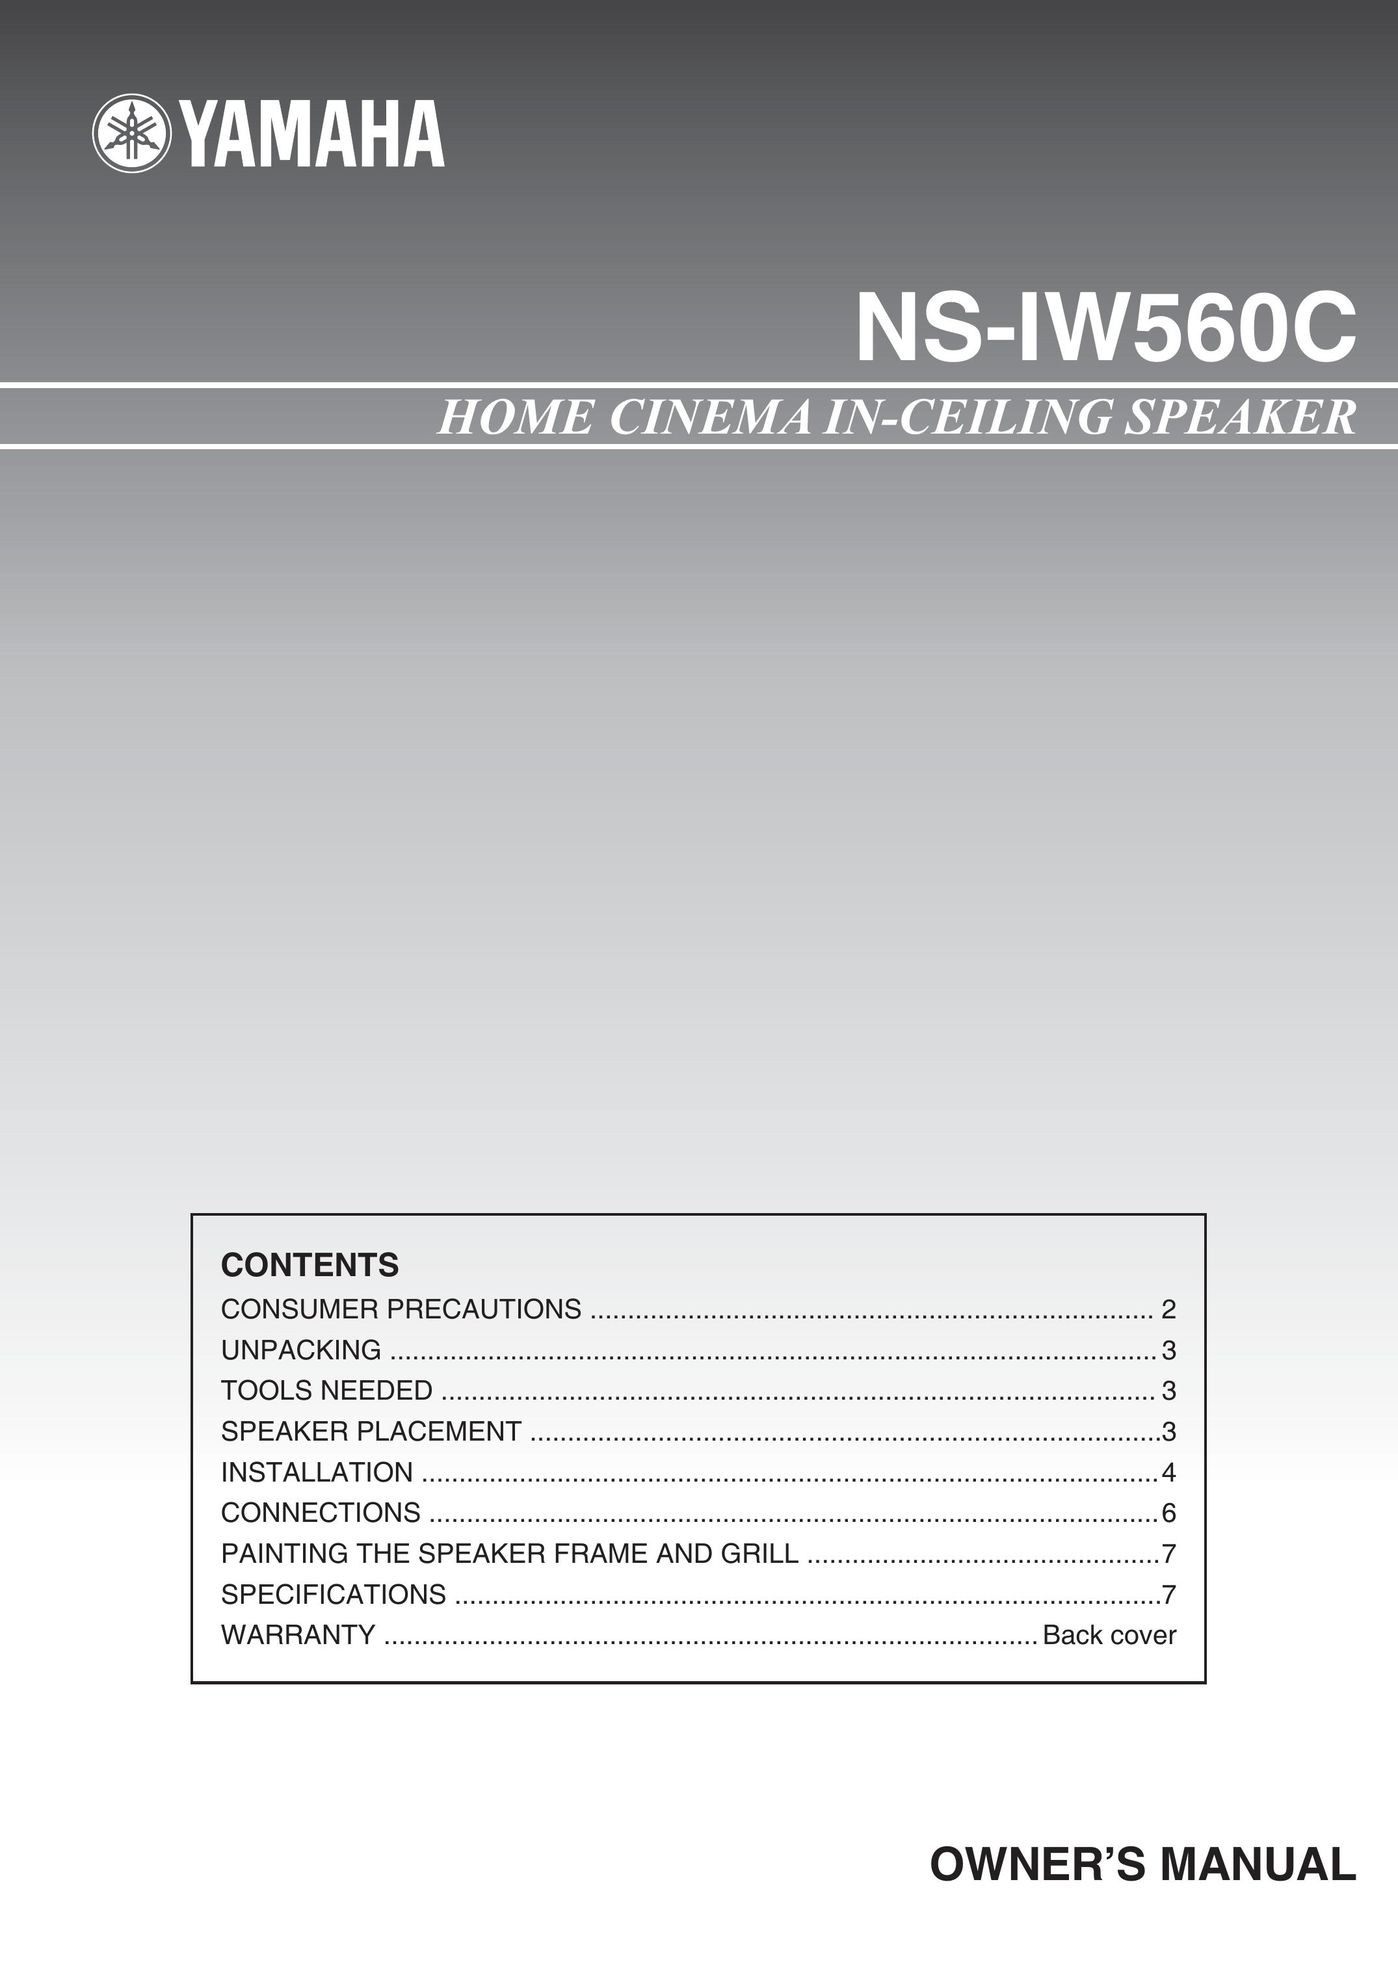 Niles Audio NS-IW560C Speaker System User Manual